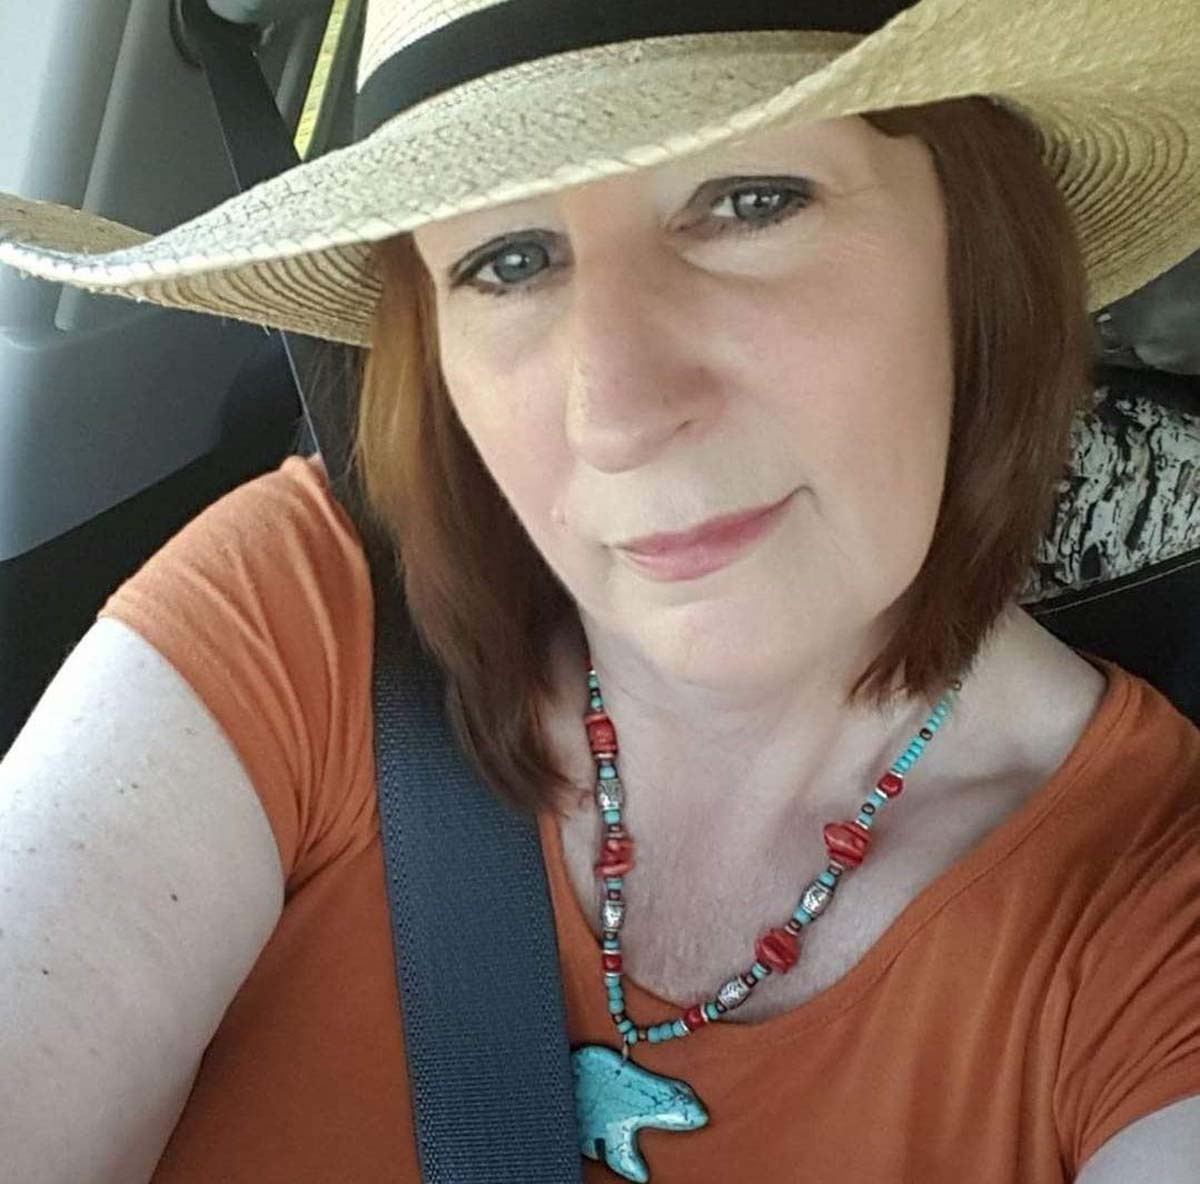 Closeup of woman wearing hat and orange top.